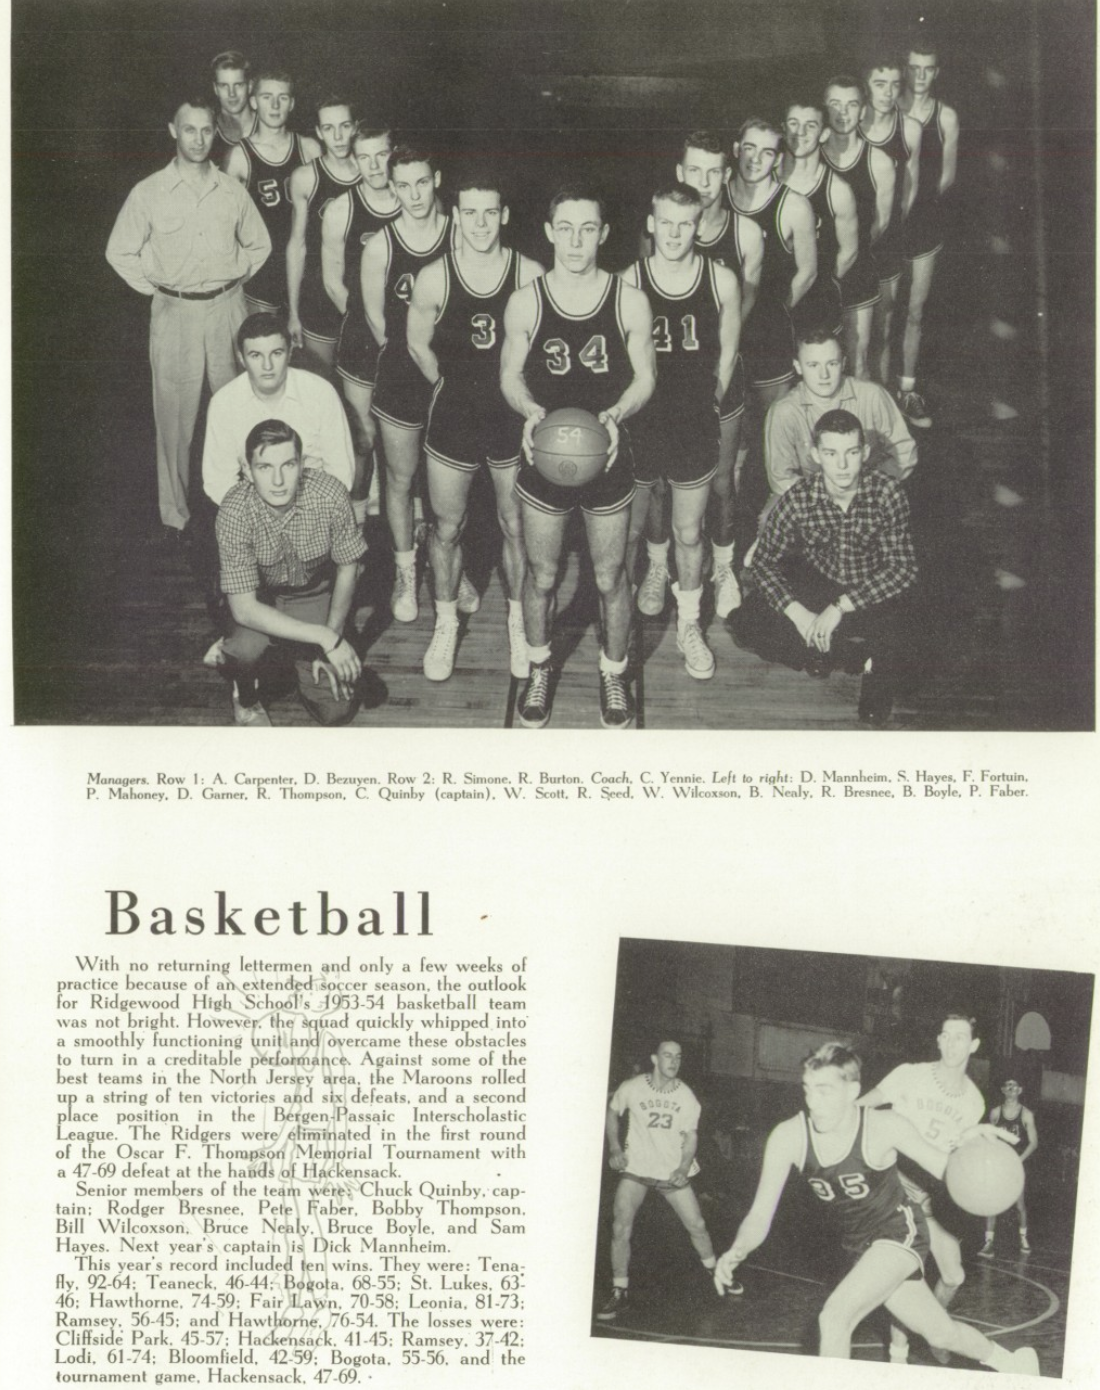 1954 Boys’ Basketball Team